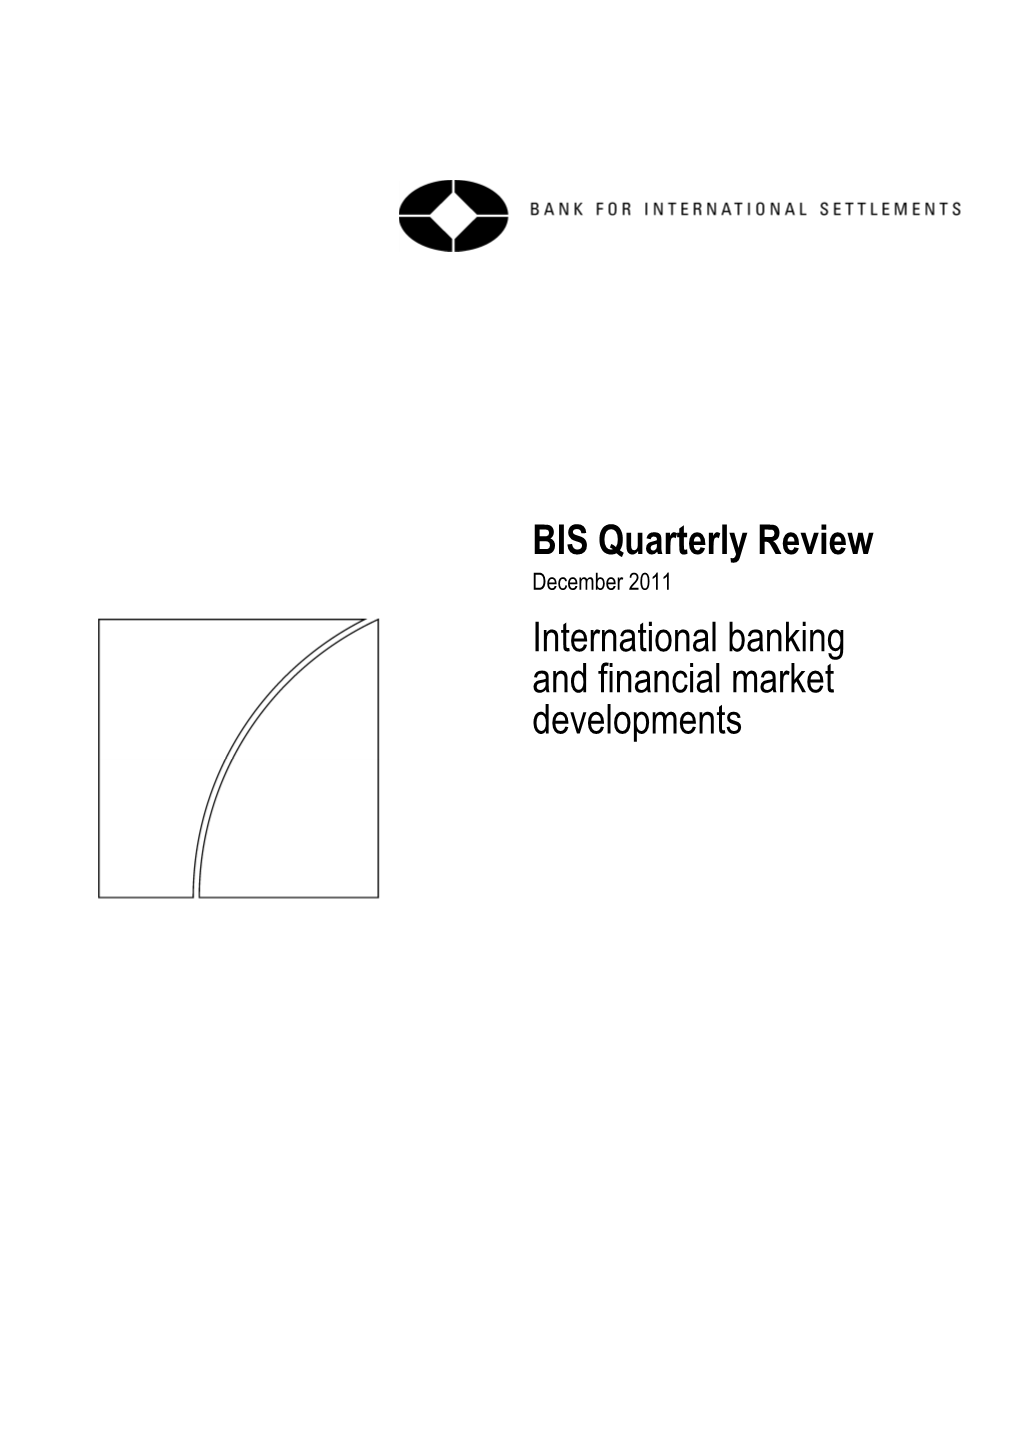 BIS Quarterly Review December 2011 International Banking and Financial Market Developments